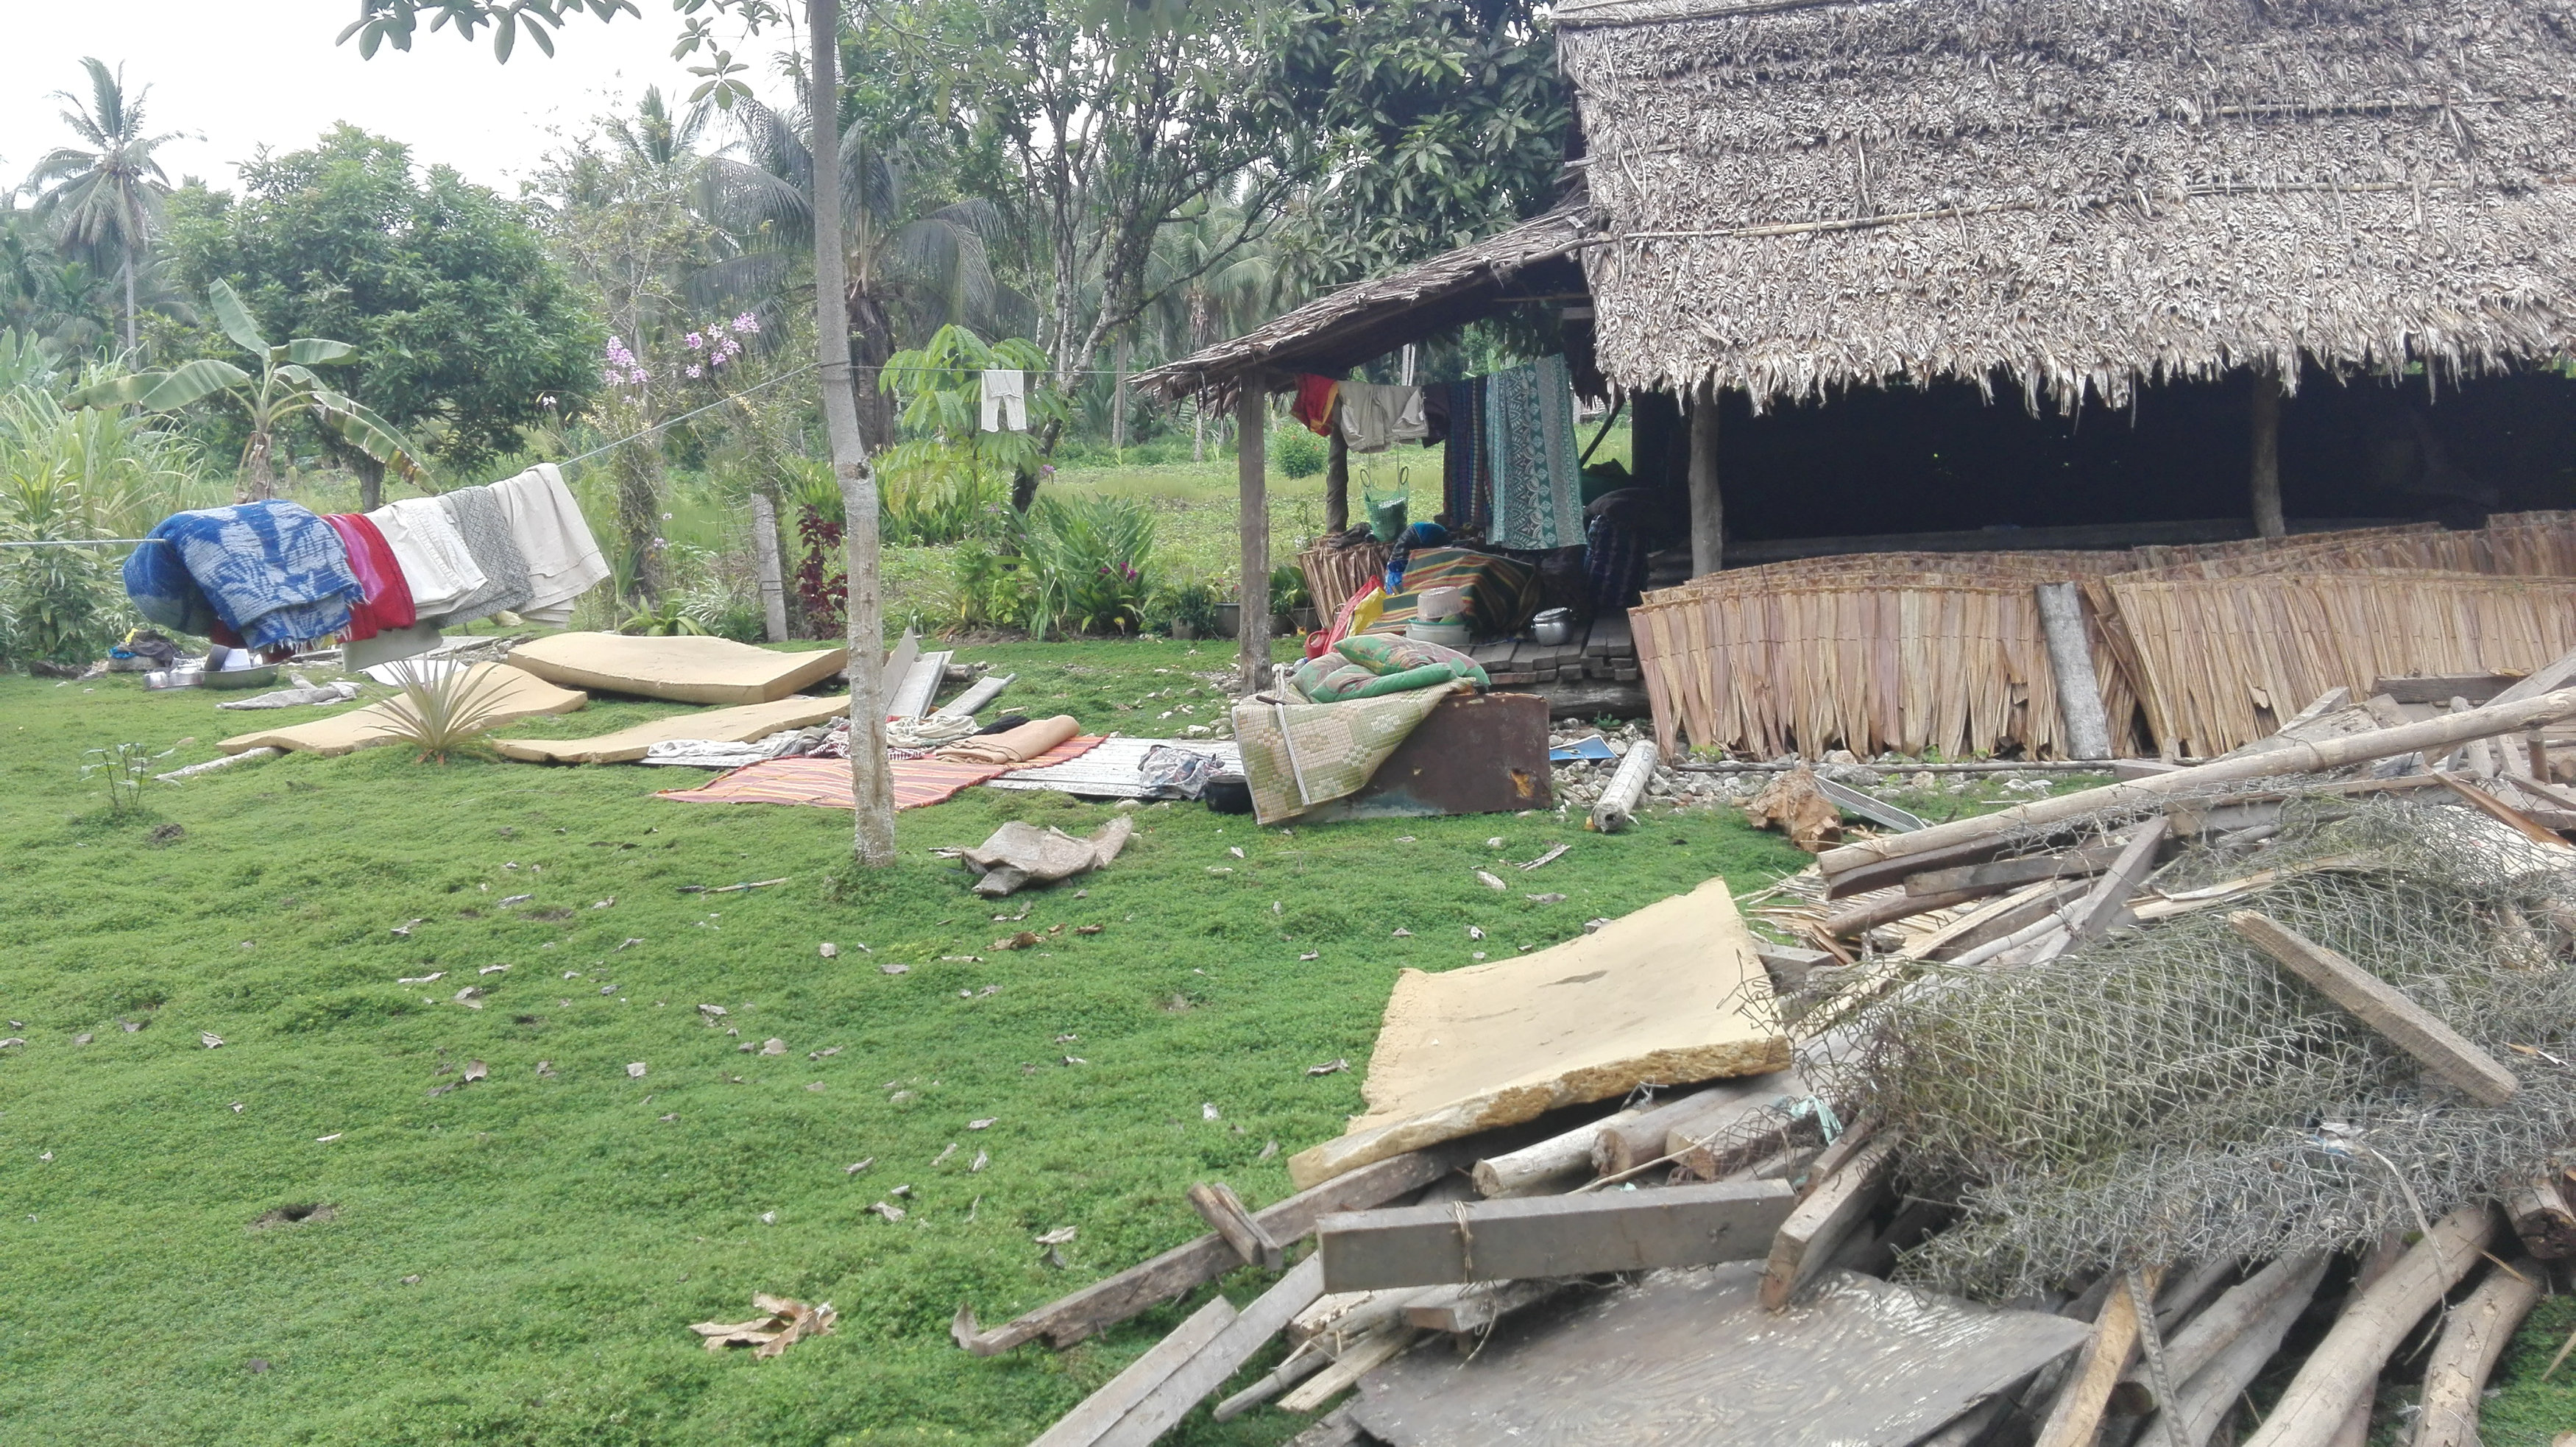 Solomon Islands scrambles to reach areas hit by second major quake